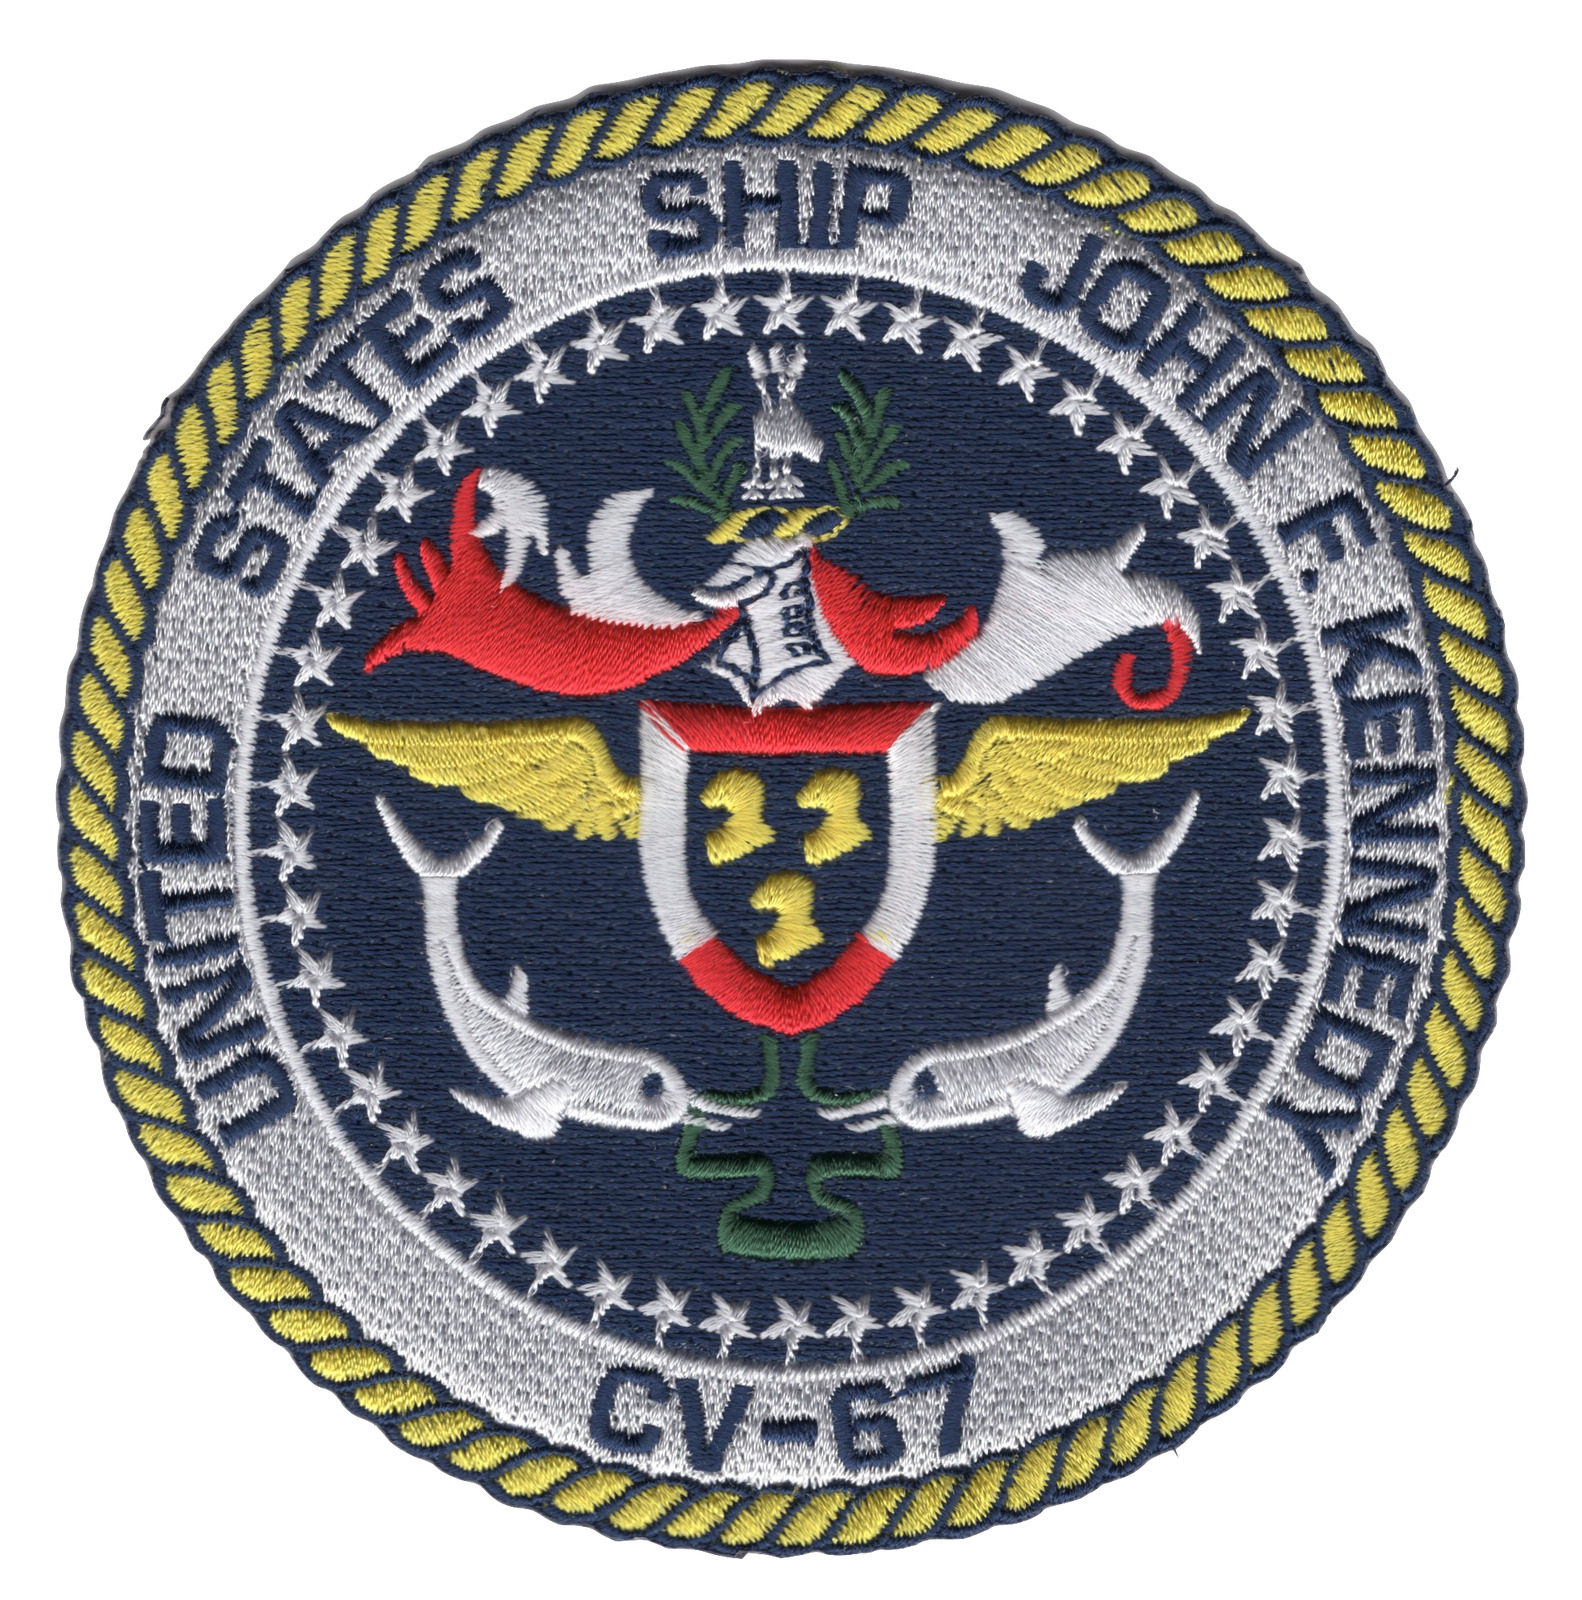 CV-67 USS John F Kennedy Patch